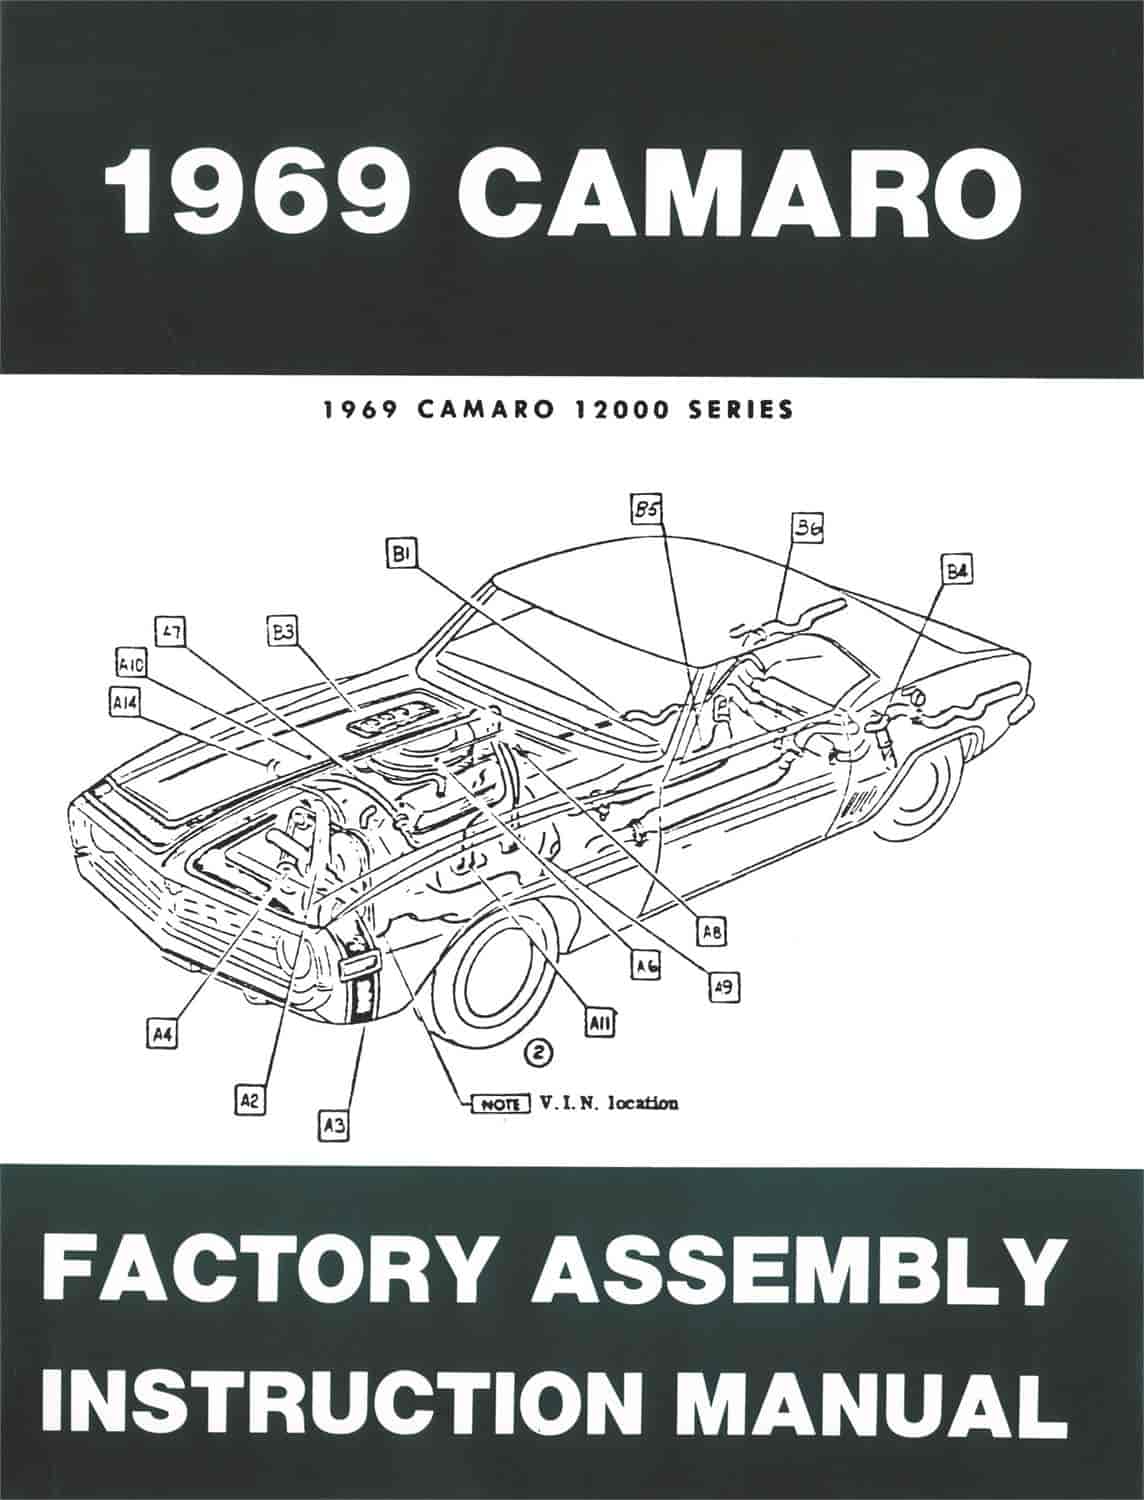 Factory Assembly Manual 1969 Chevy Camaro